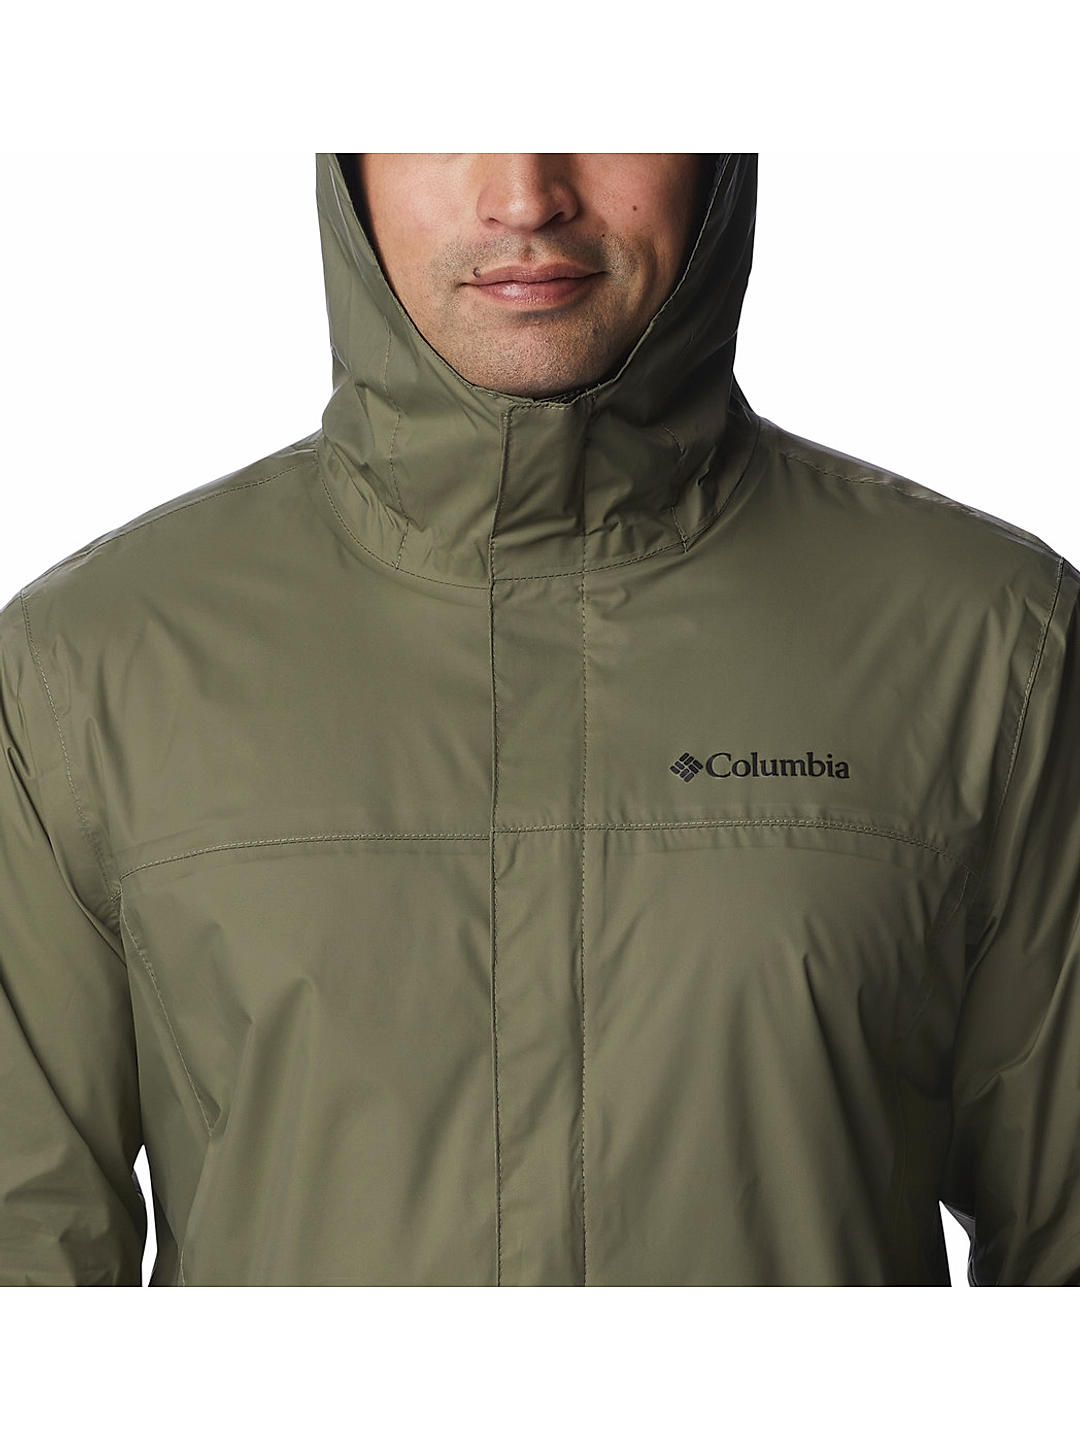 Buy Green Watertight II Jacket for Men Online at Columbia Sportswear ...